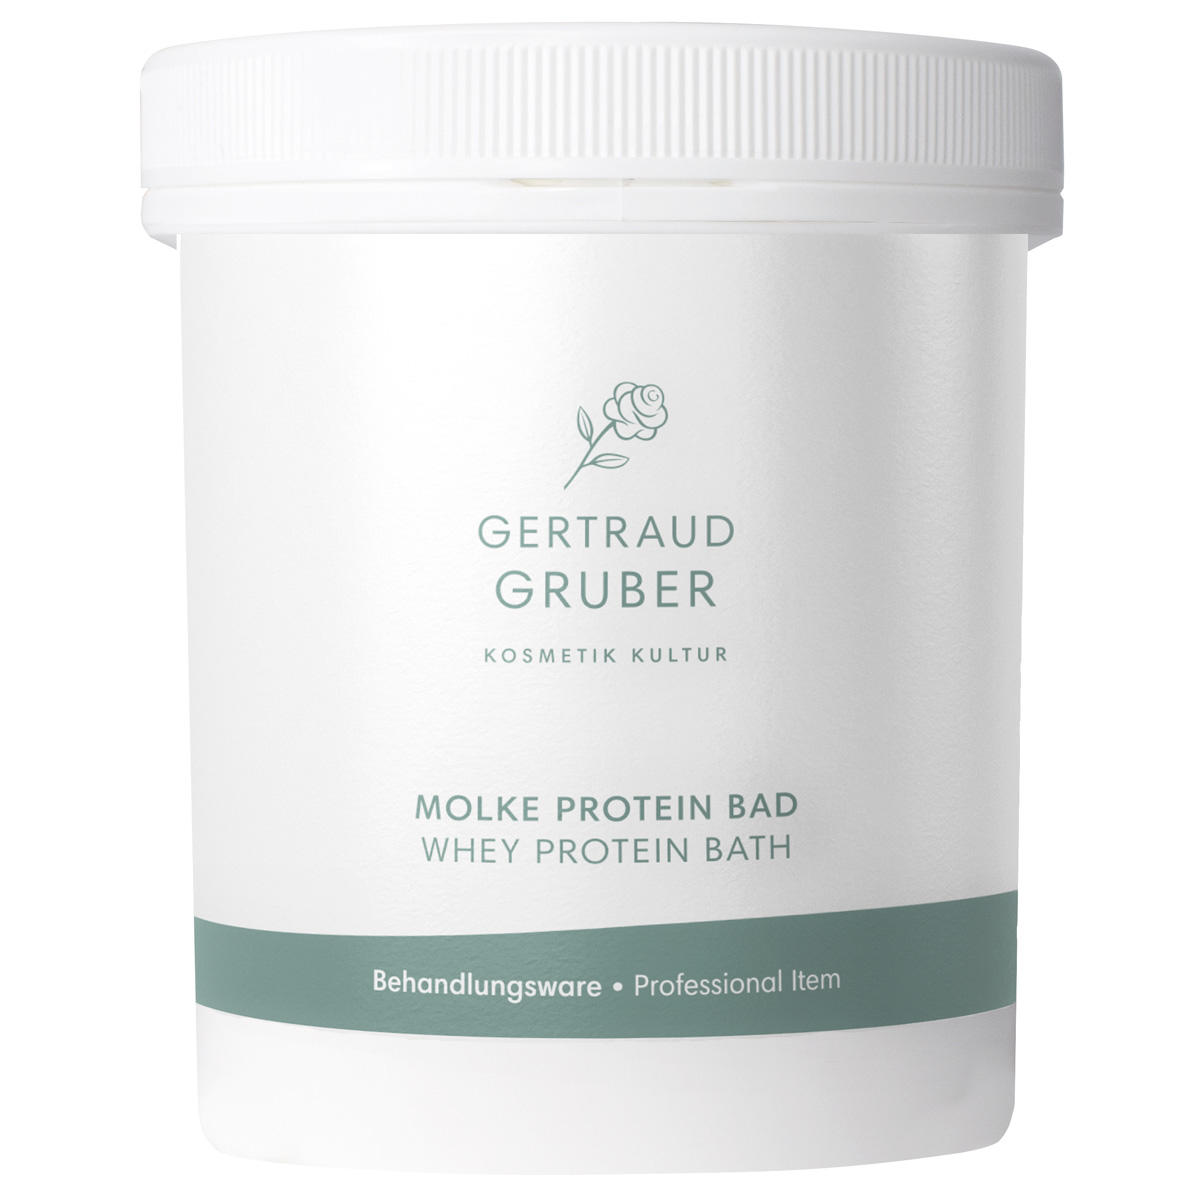 GERTRAUD GRUBER Molke Protein Bad 300 g - 1